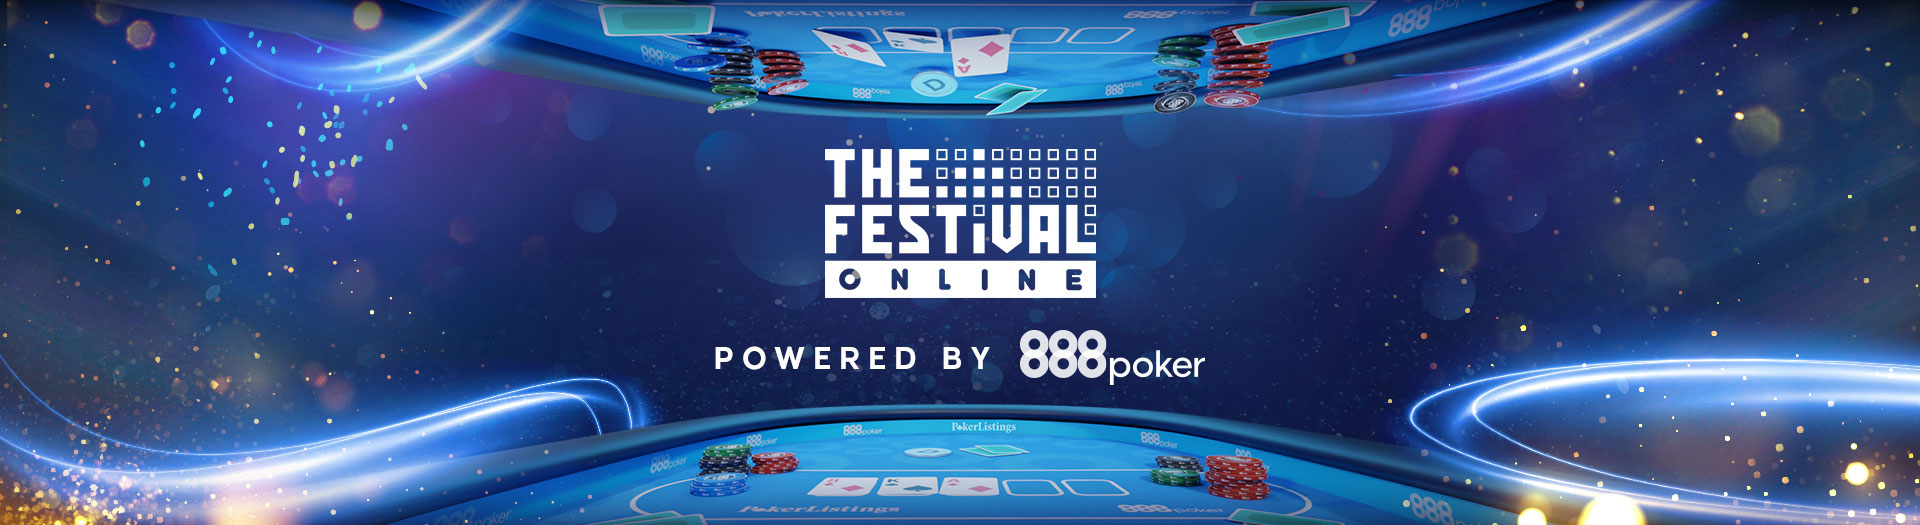 TS-55237-The-Festival-Online-PokerListings-LP-image-PC-1677664191587_tcm1488-581070